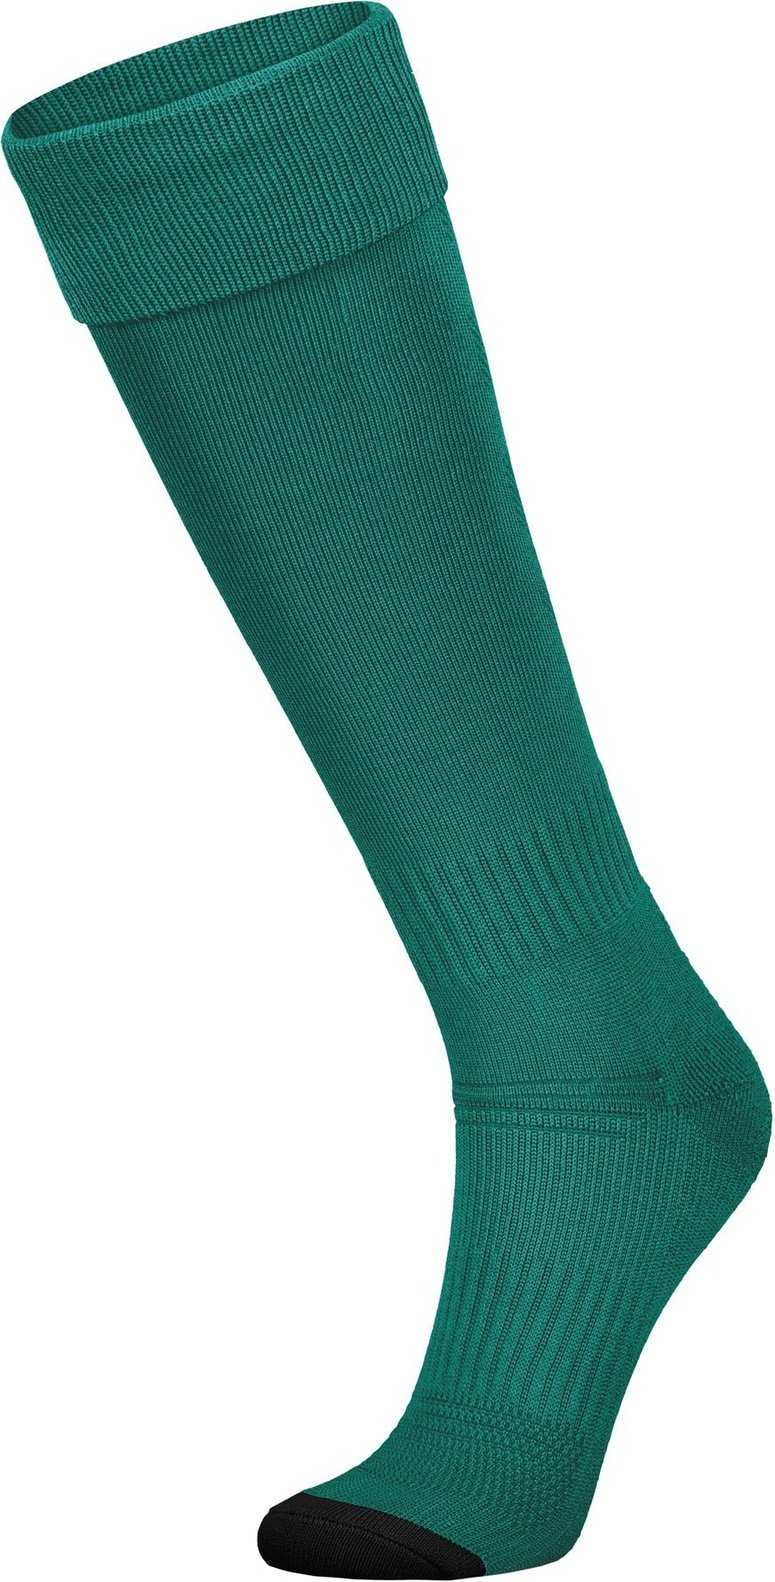 High Five 329130 Impact+ Chill Soccer Socks - Dark Green Black - HIT a Double